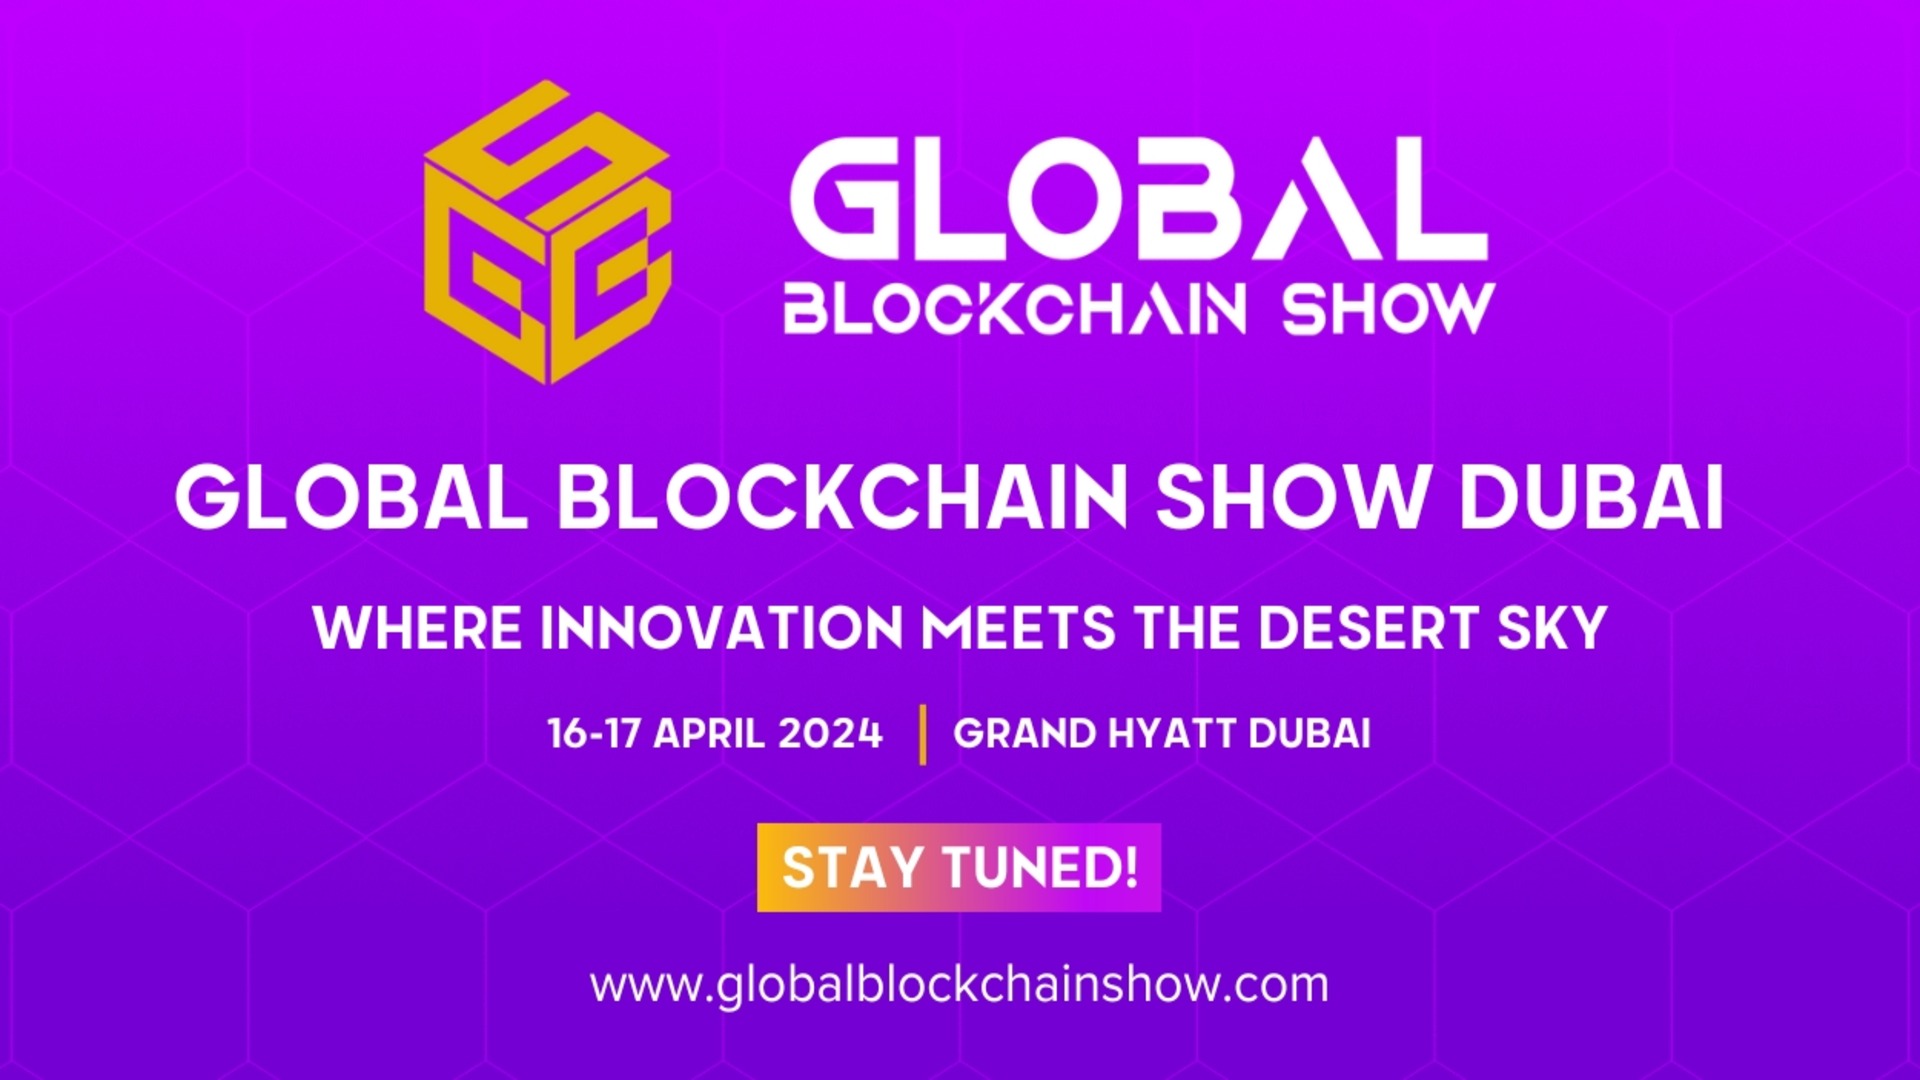 Global Blockchain Show Dubai: Gathering the Top Blockchain and Web3 experts